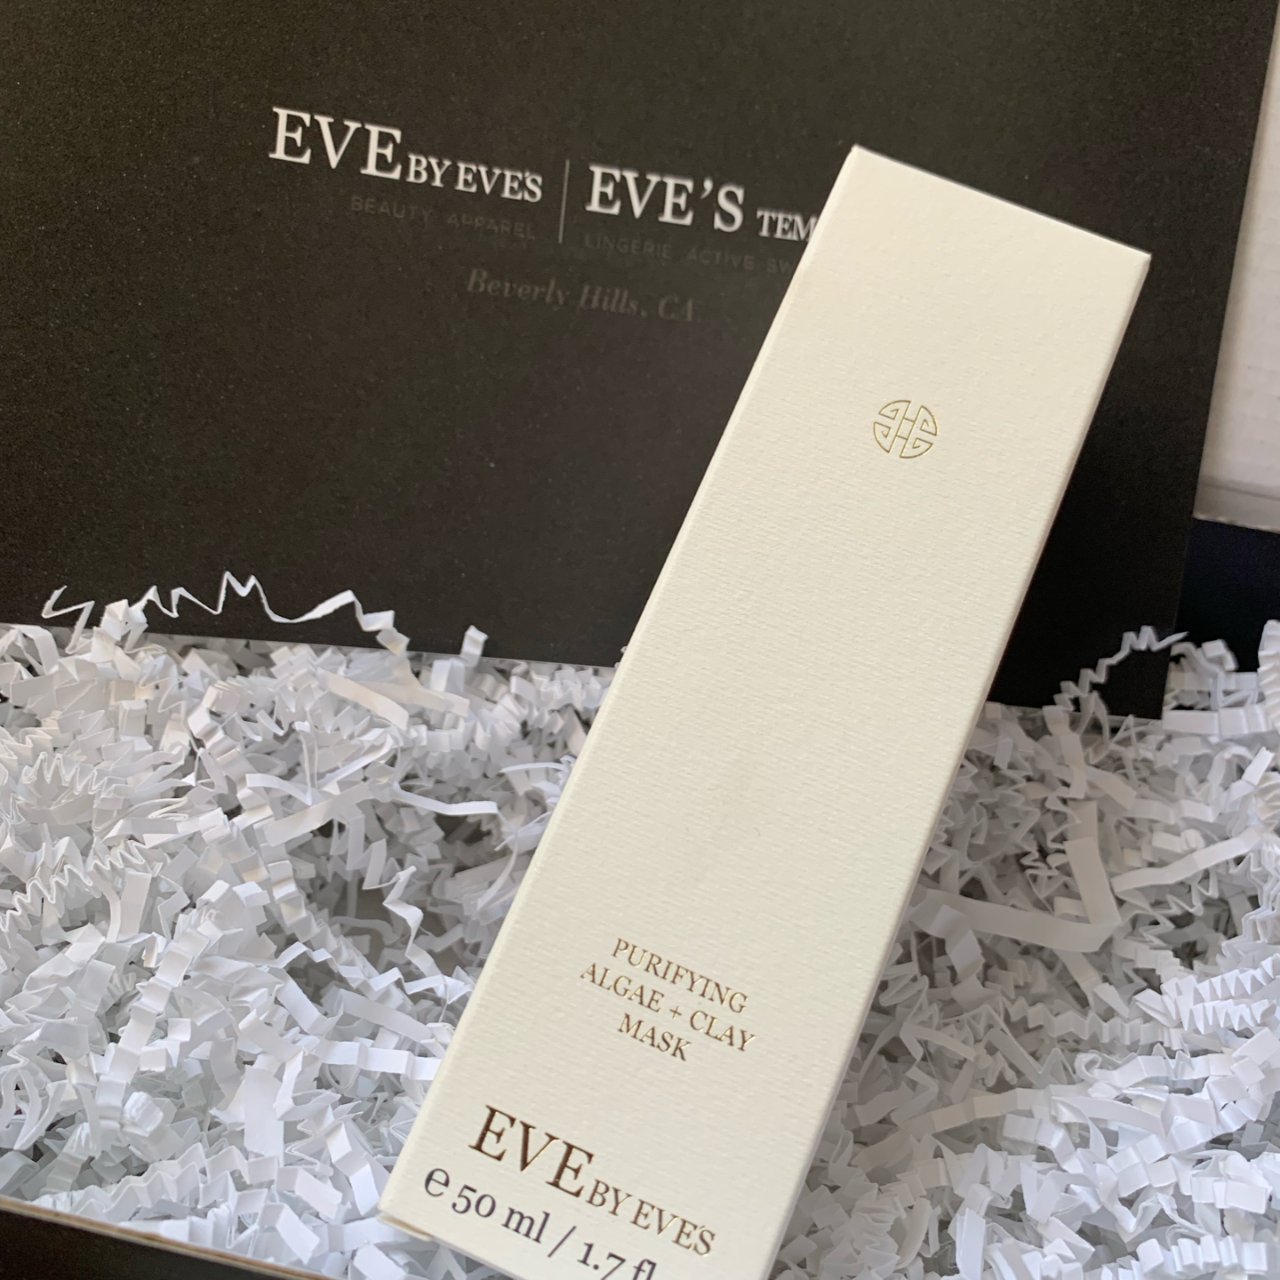 Eve by Eve's,面膜测评